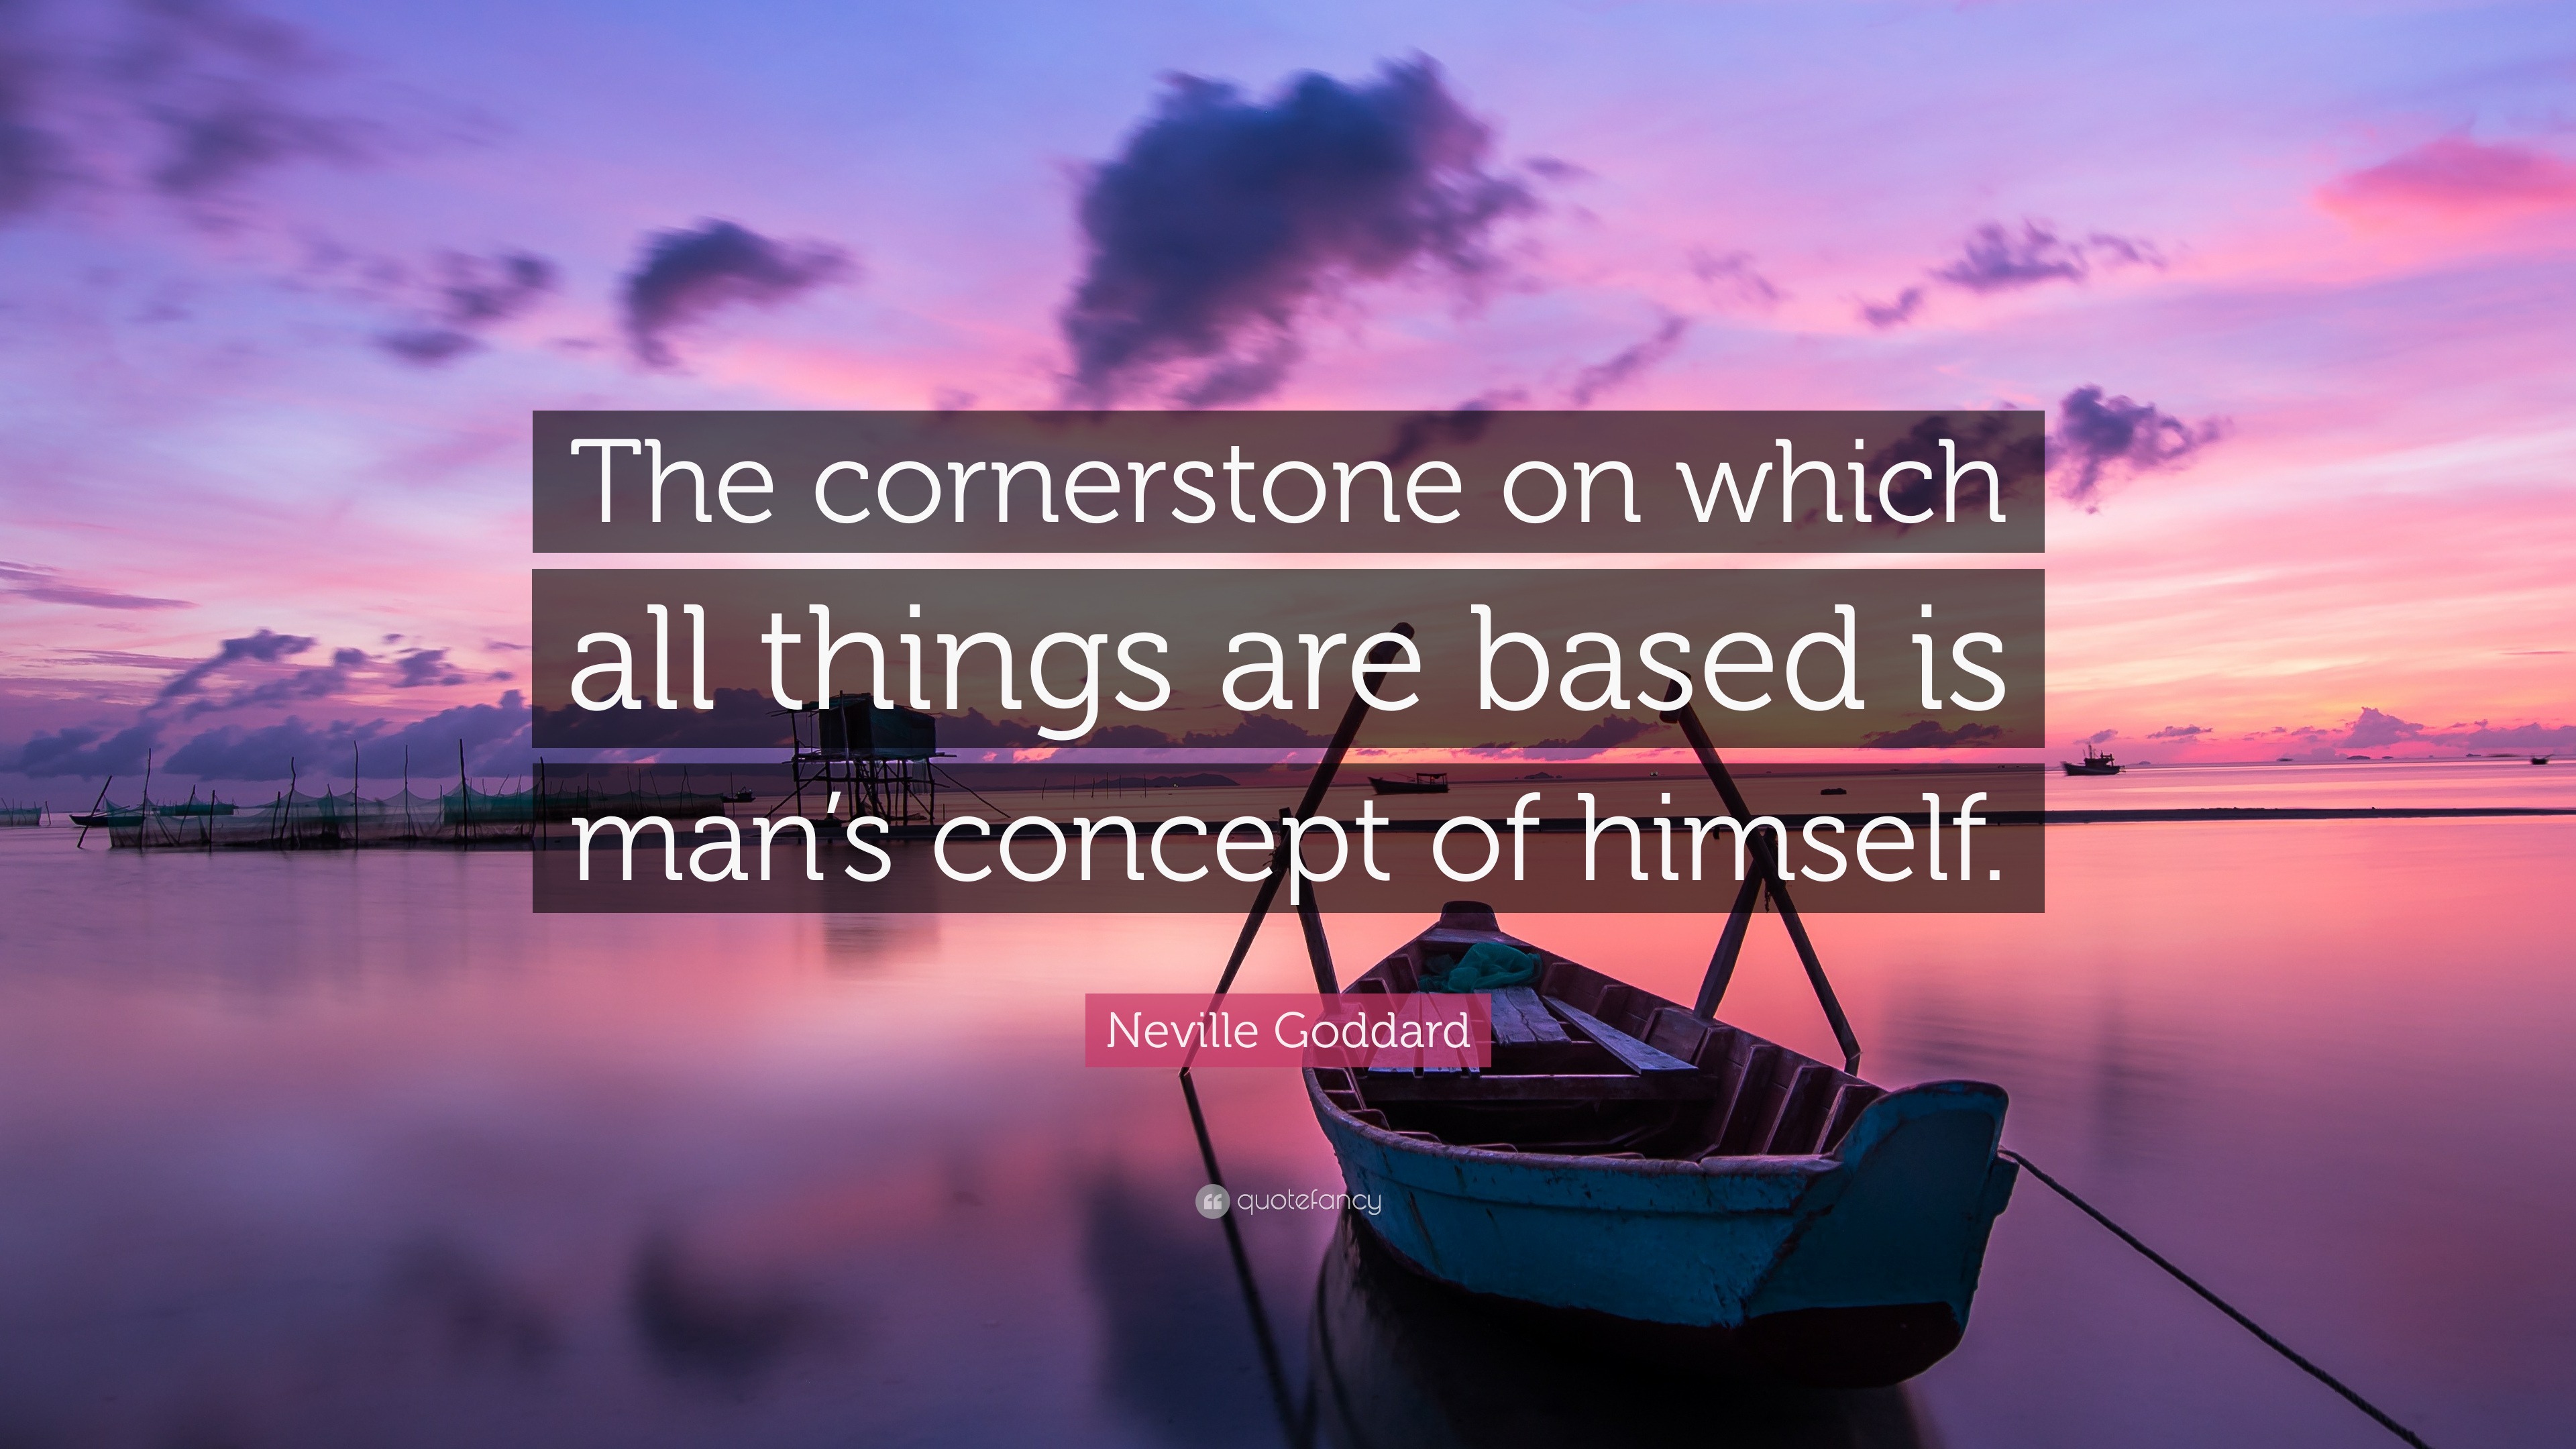 Neville Goddard Quote: “The cornerstone